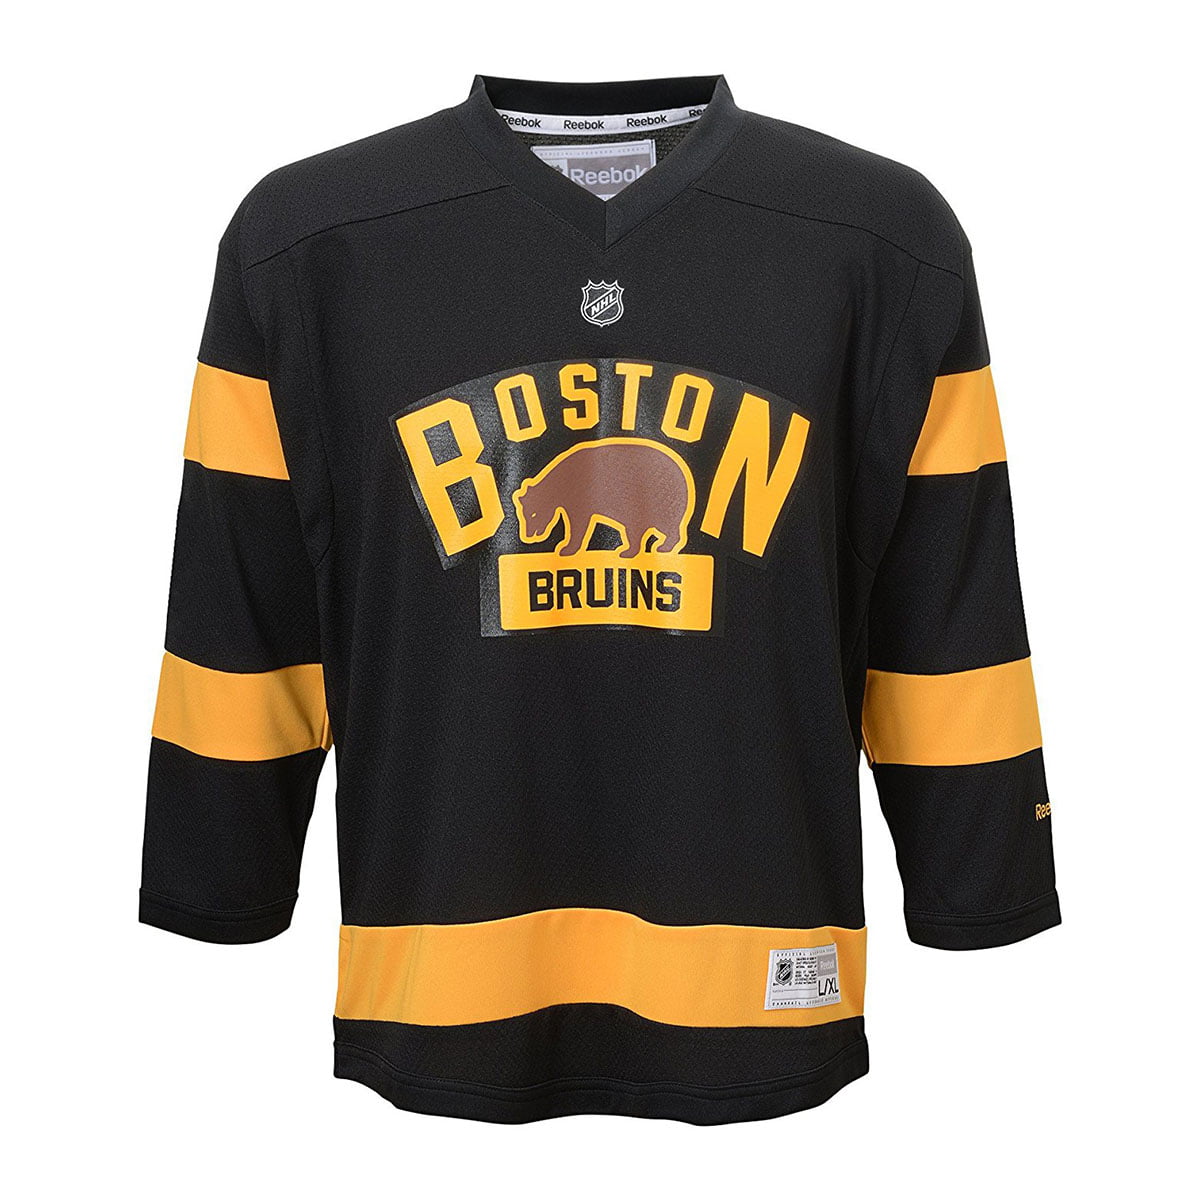 Reebok Boston Bruins Youth Winter 